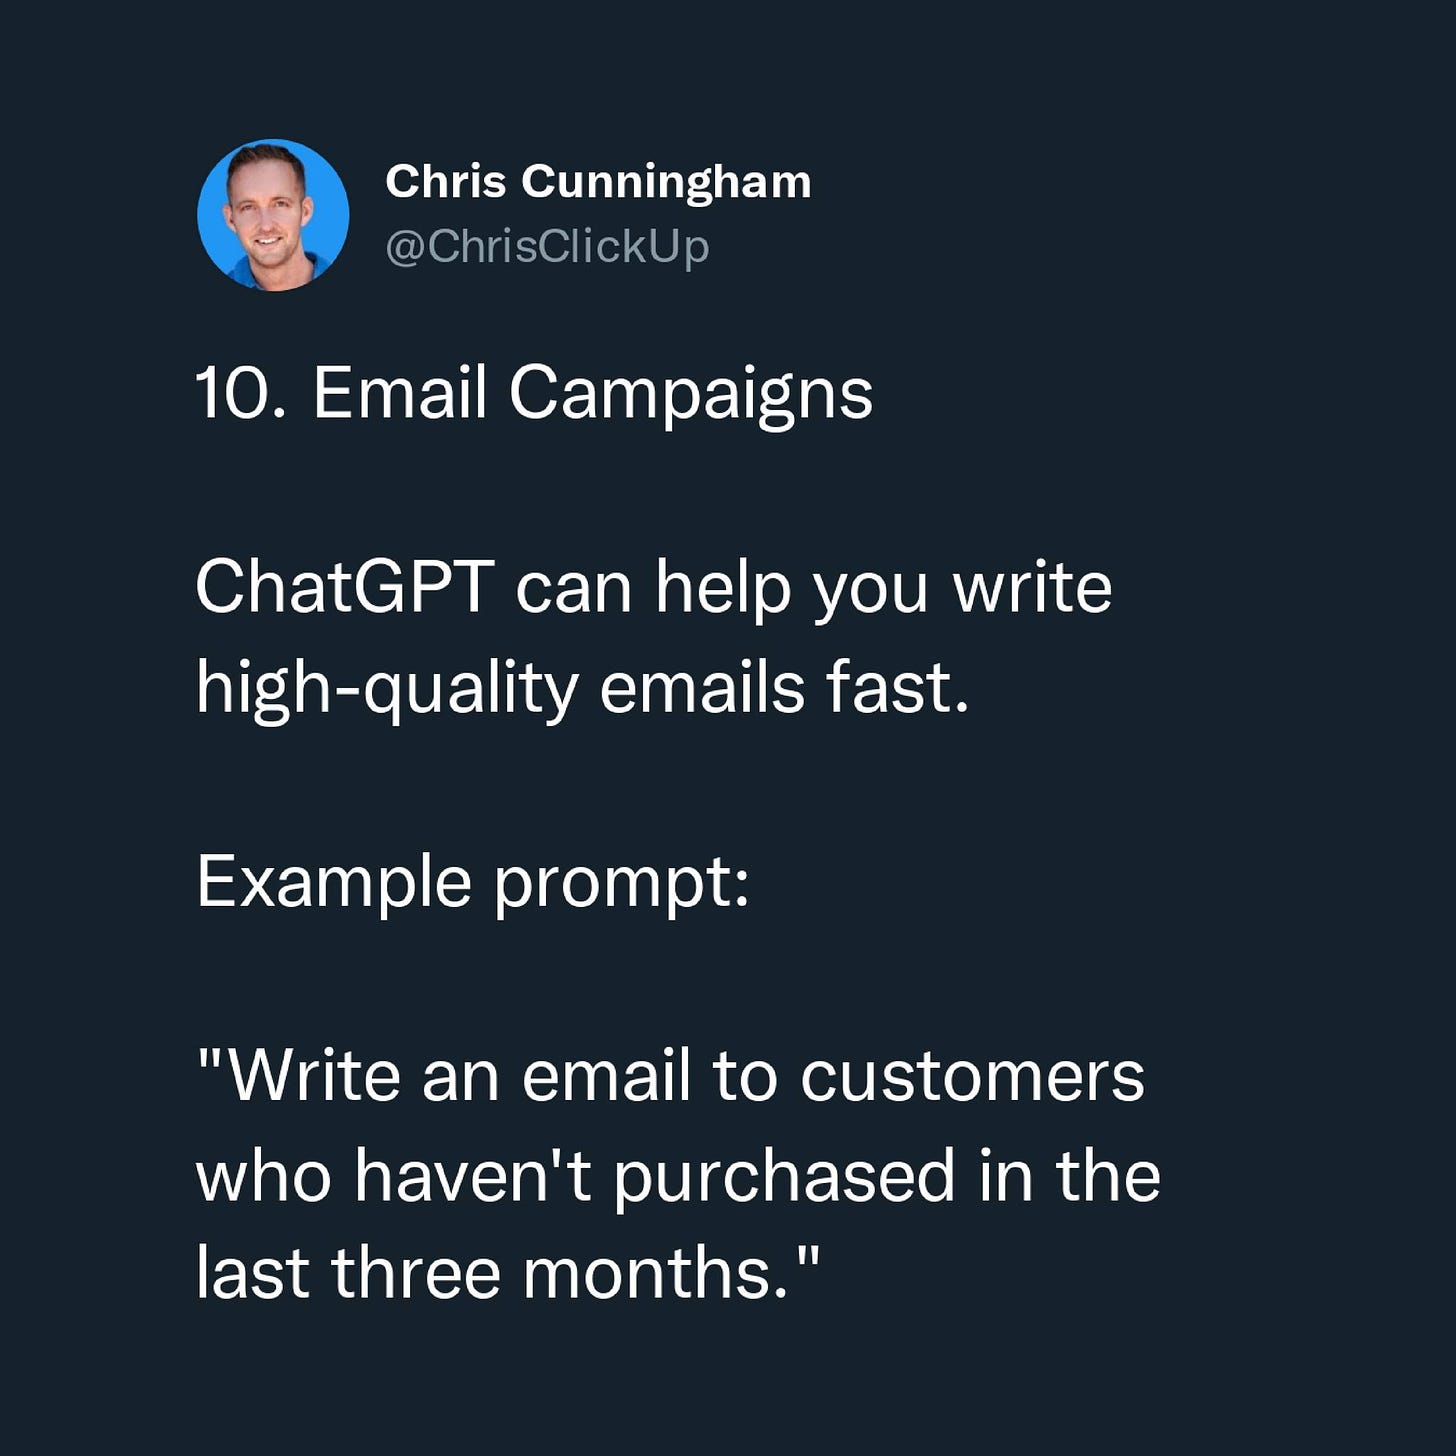 Có thể là ảnh chụp màn hình Twitter về 1 người và văn bản cho biết 'Chris Cunningham @ChrisClickUp 10. Email Campaigns ChatGPT can help you write high-quality emails fast. Example prompt: "Write an email to customers who haven't purchased in the ast three months."'